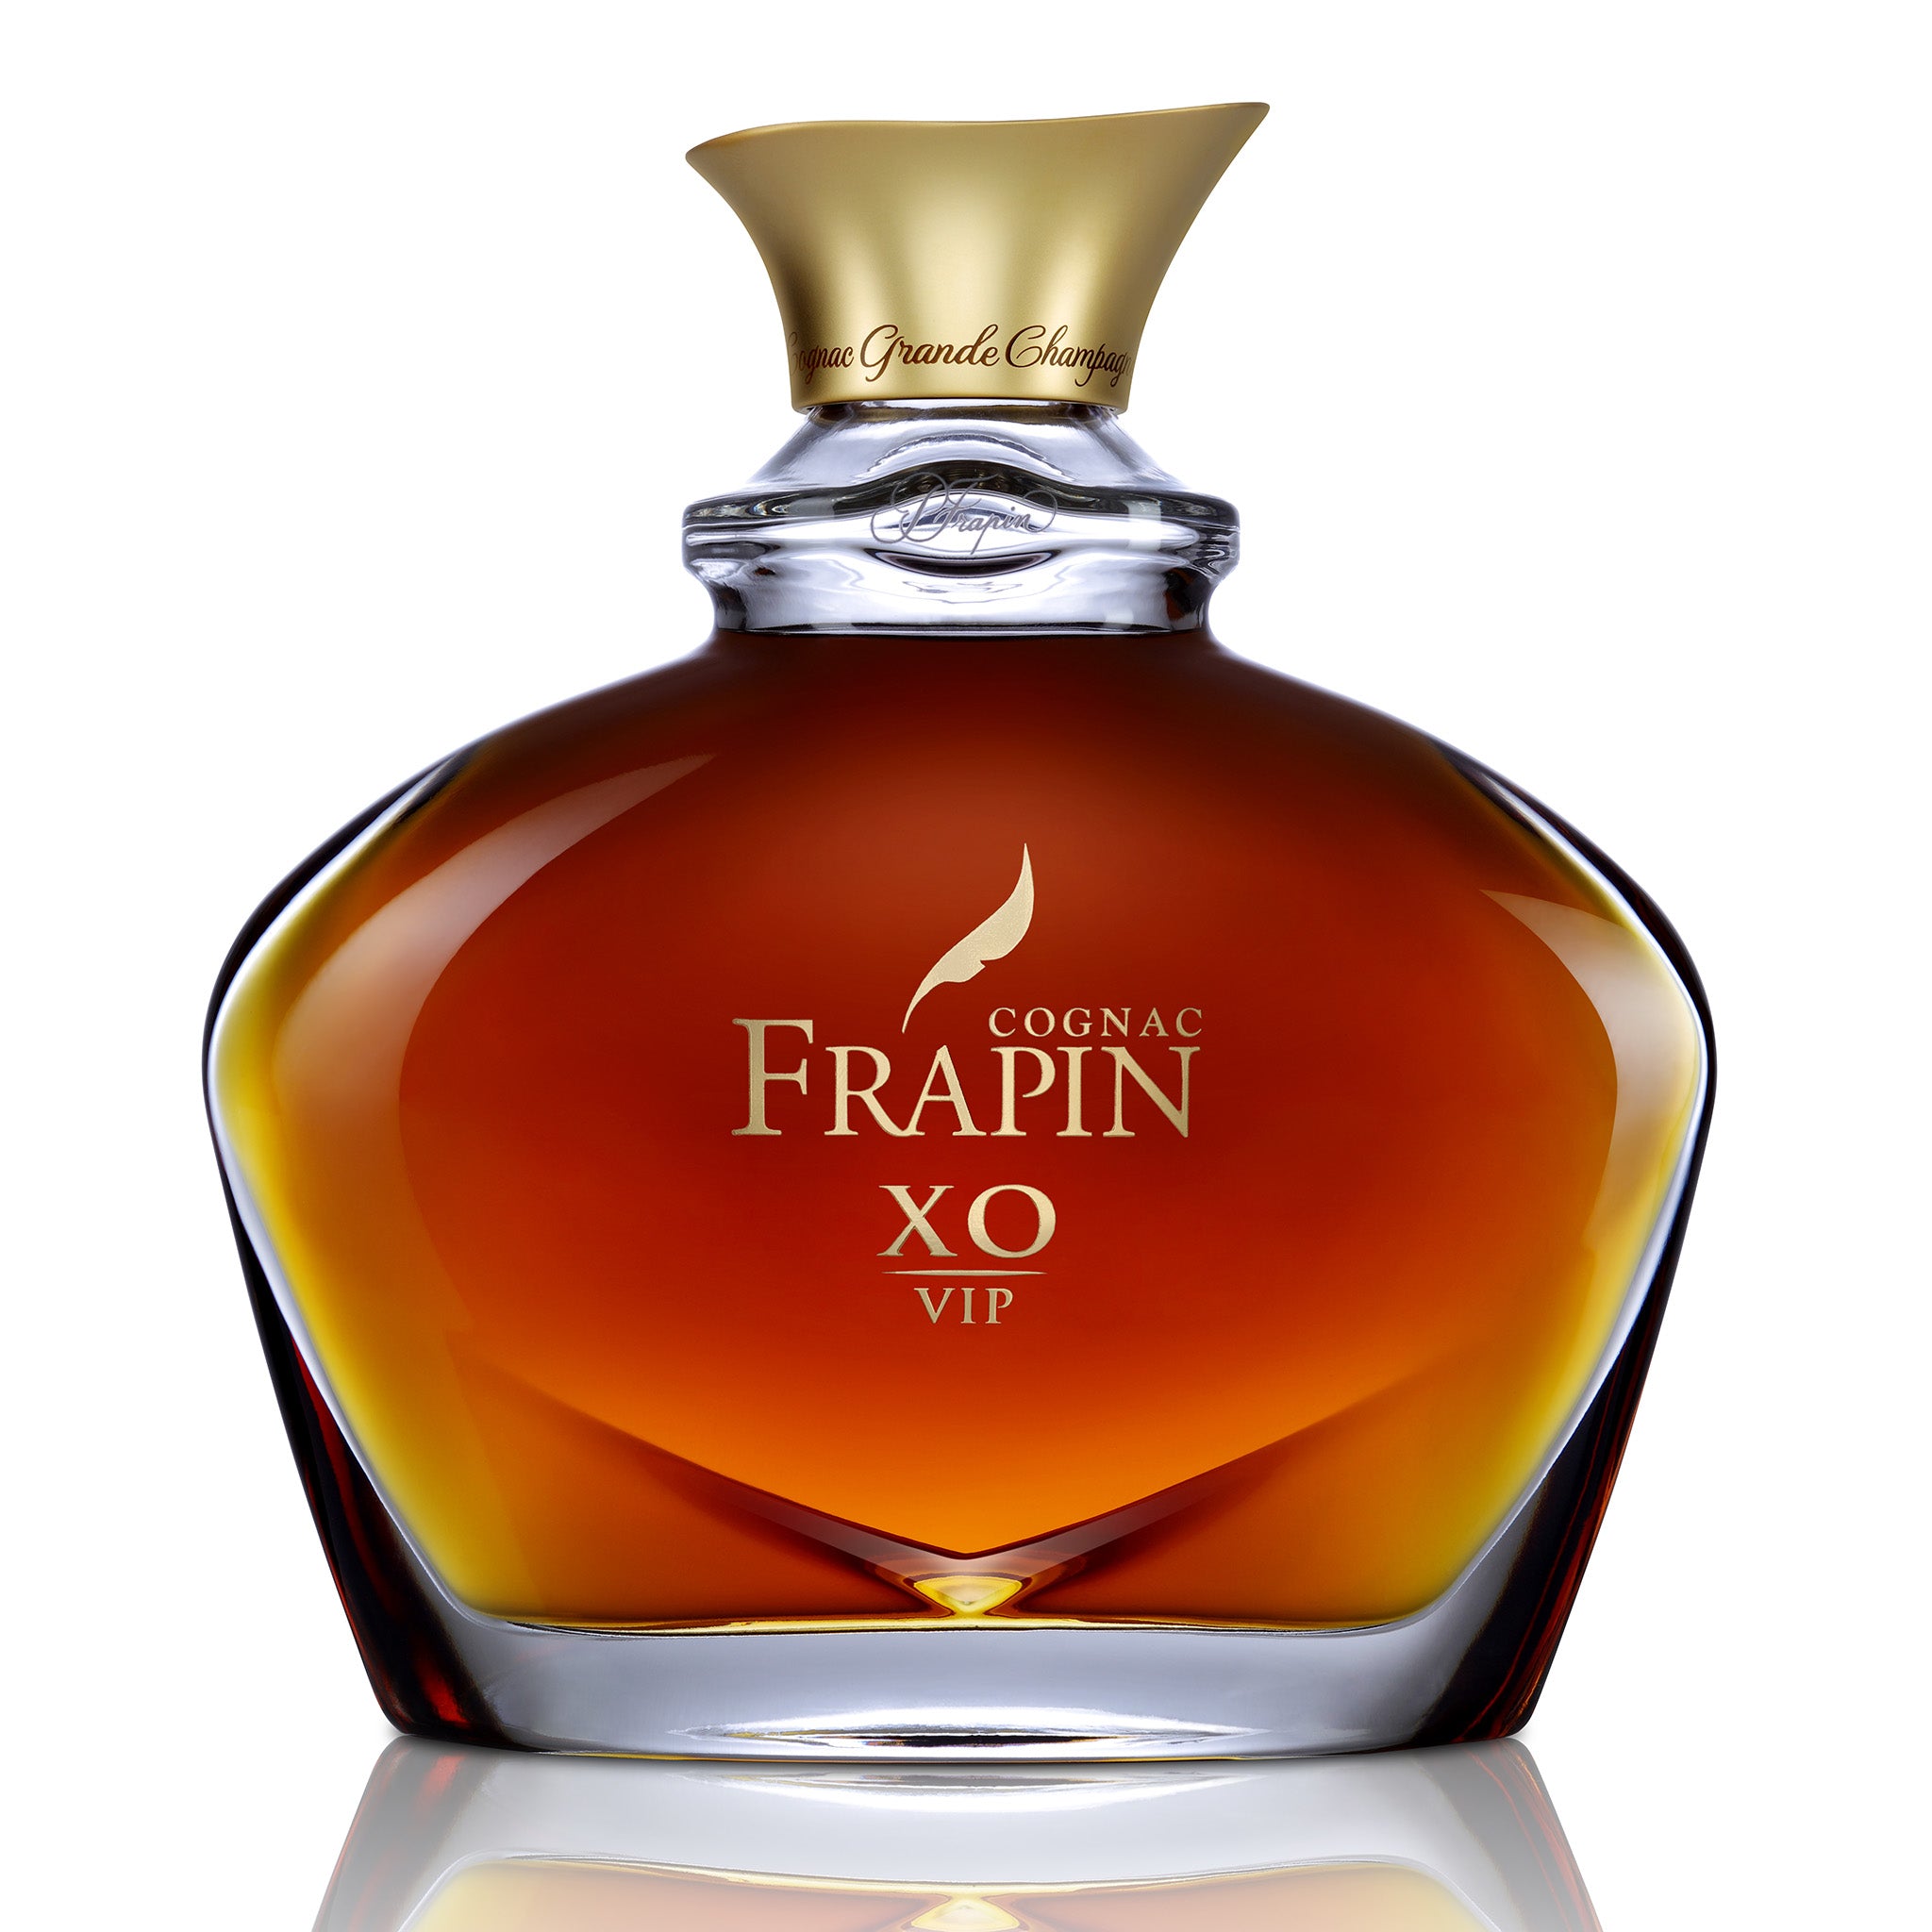 Frapin grande champagne. Frapin XO VIP. Cognac Frapin VIP XO grande Champagne. Коньяк Frapin XO VIP. Frapin XO VIP 0.35.